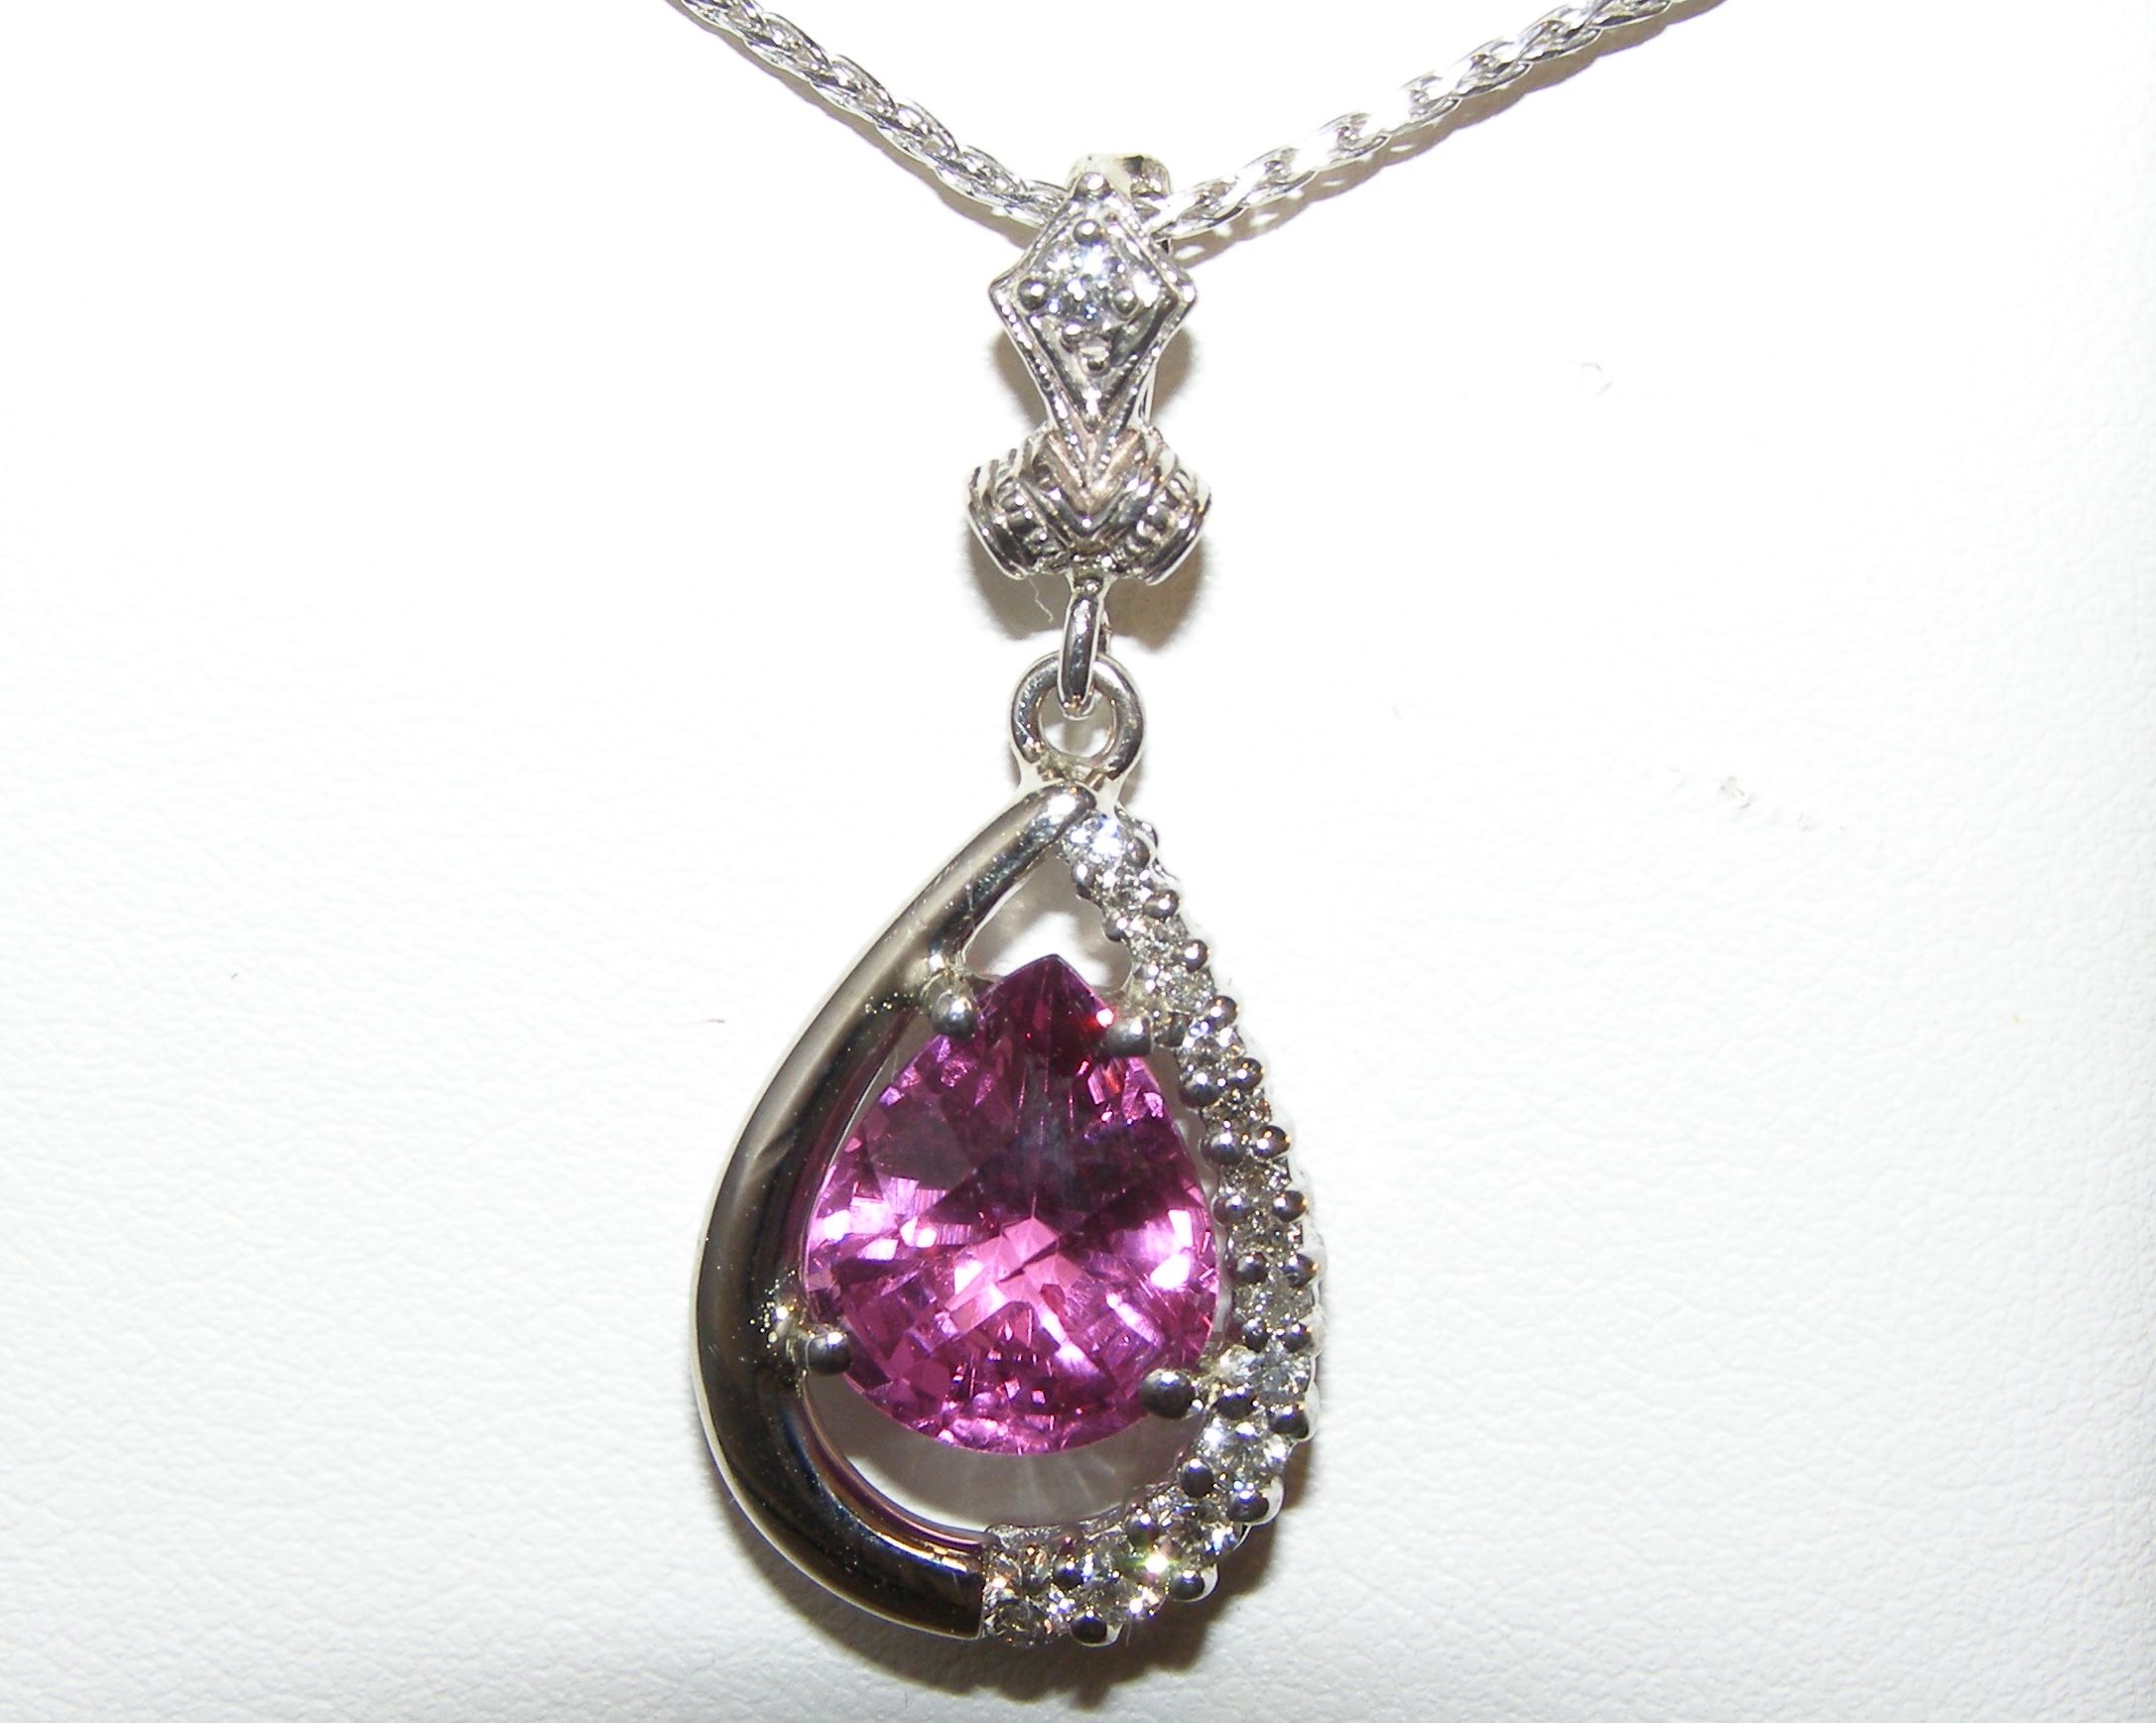 Exquisite AAA+ Rhodolite Diamond Pendant 14KWG 5.13 ctw